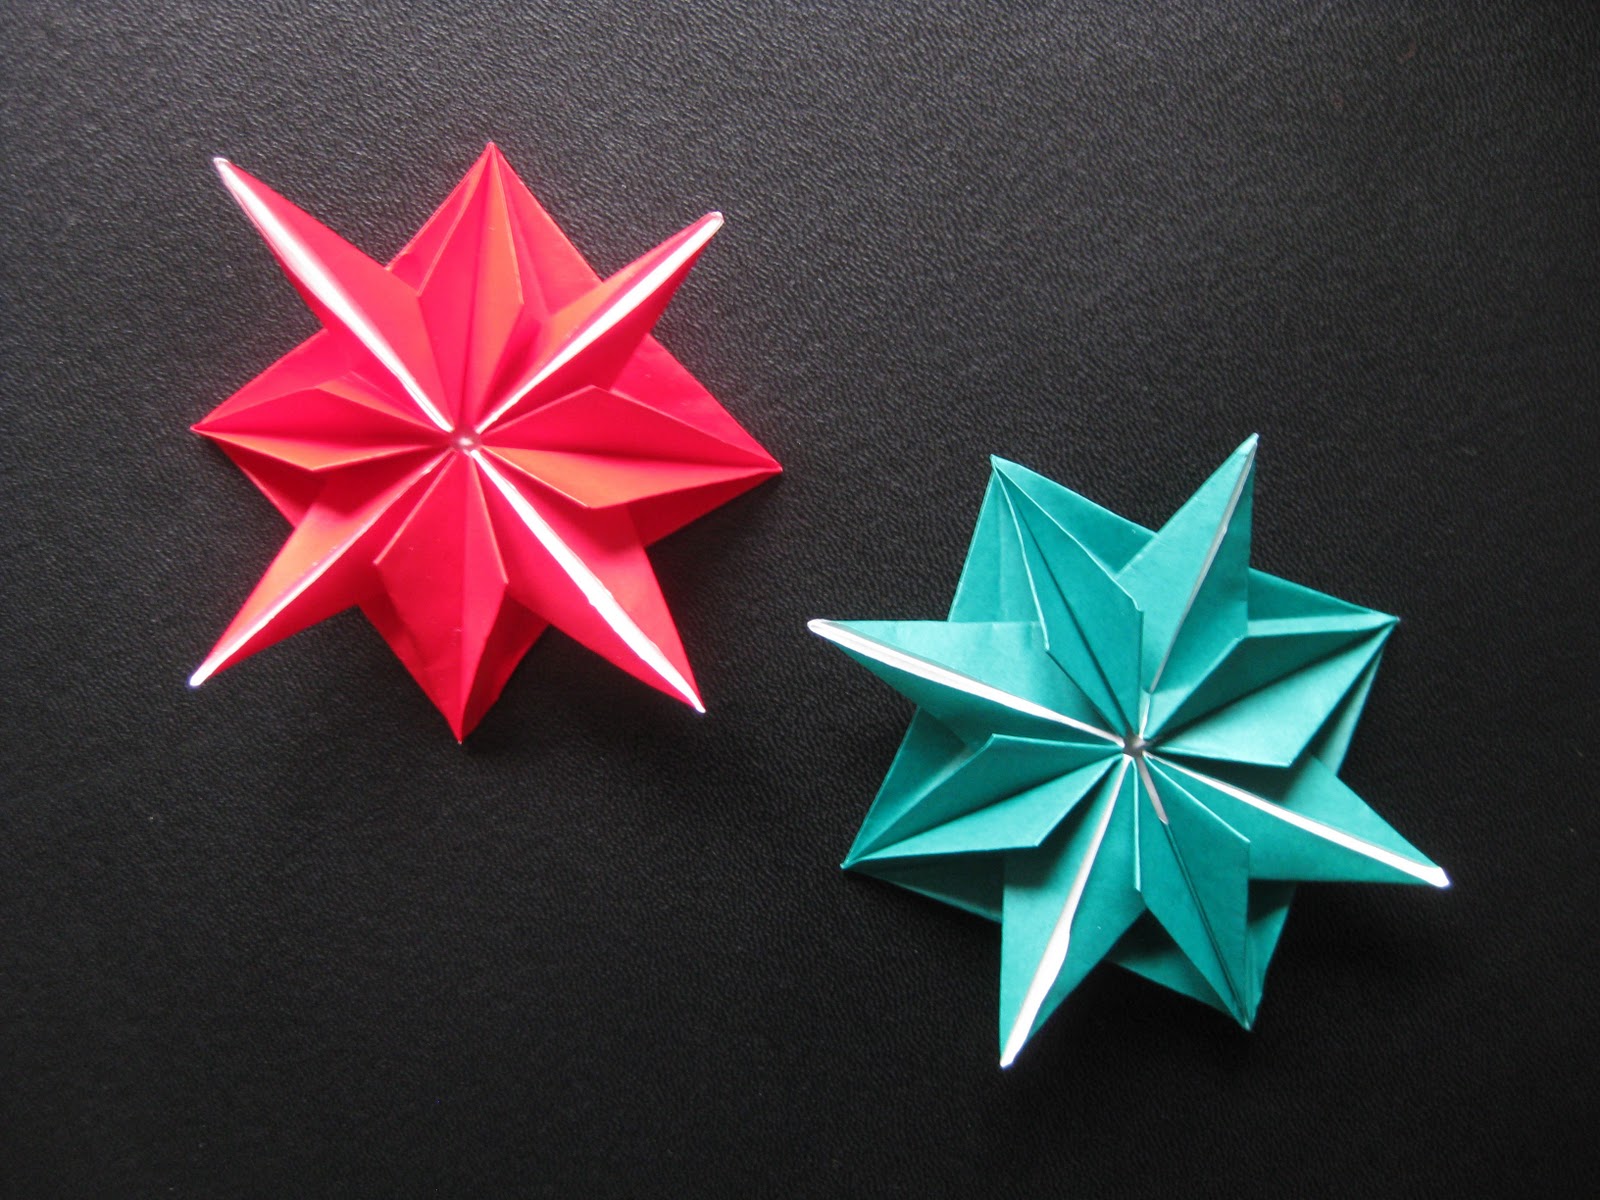 365 Days of Stargazing 103. More Origami Stars